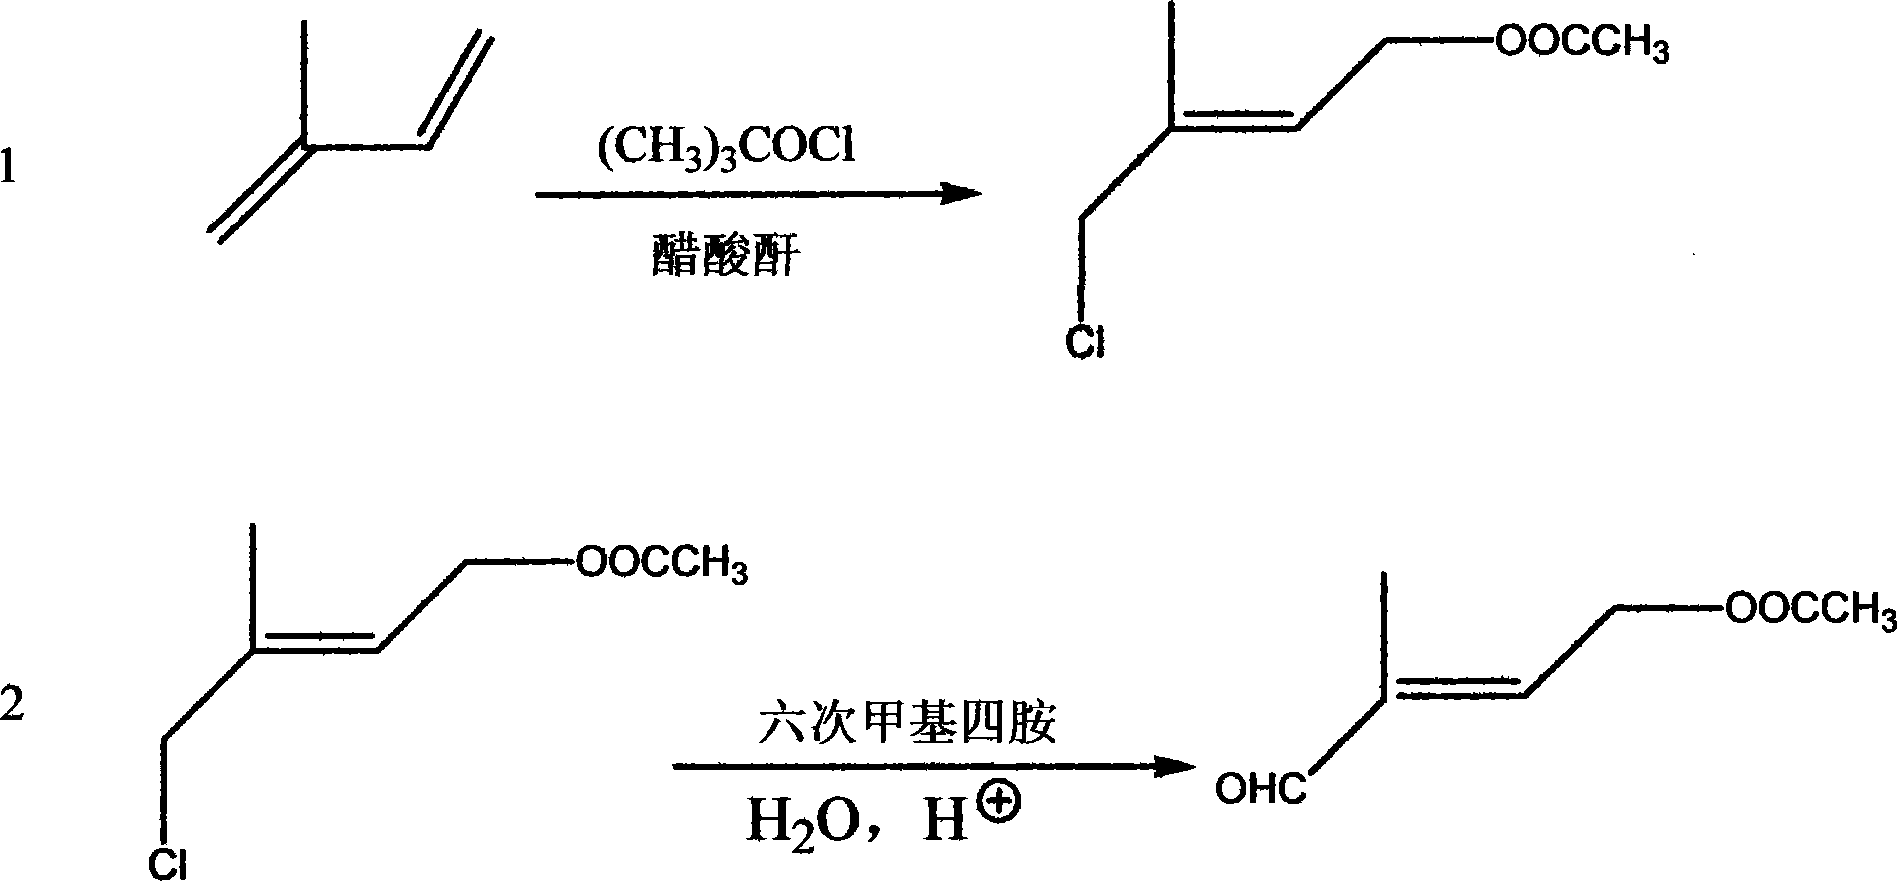 Method for preparing antiform - 4 - acetoxy - 2 - methyl - butenoic aldehyde